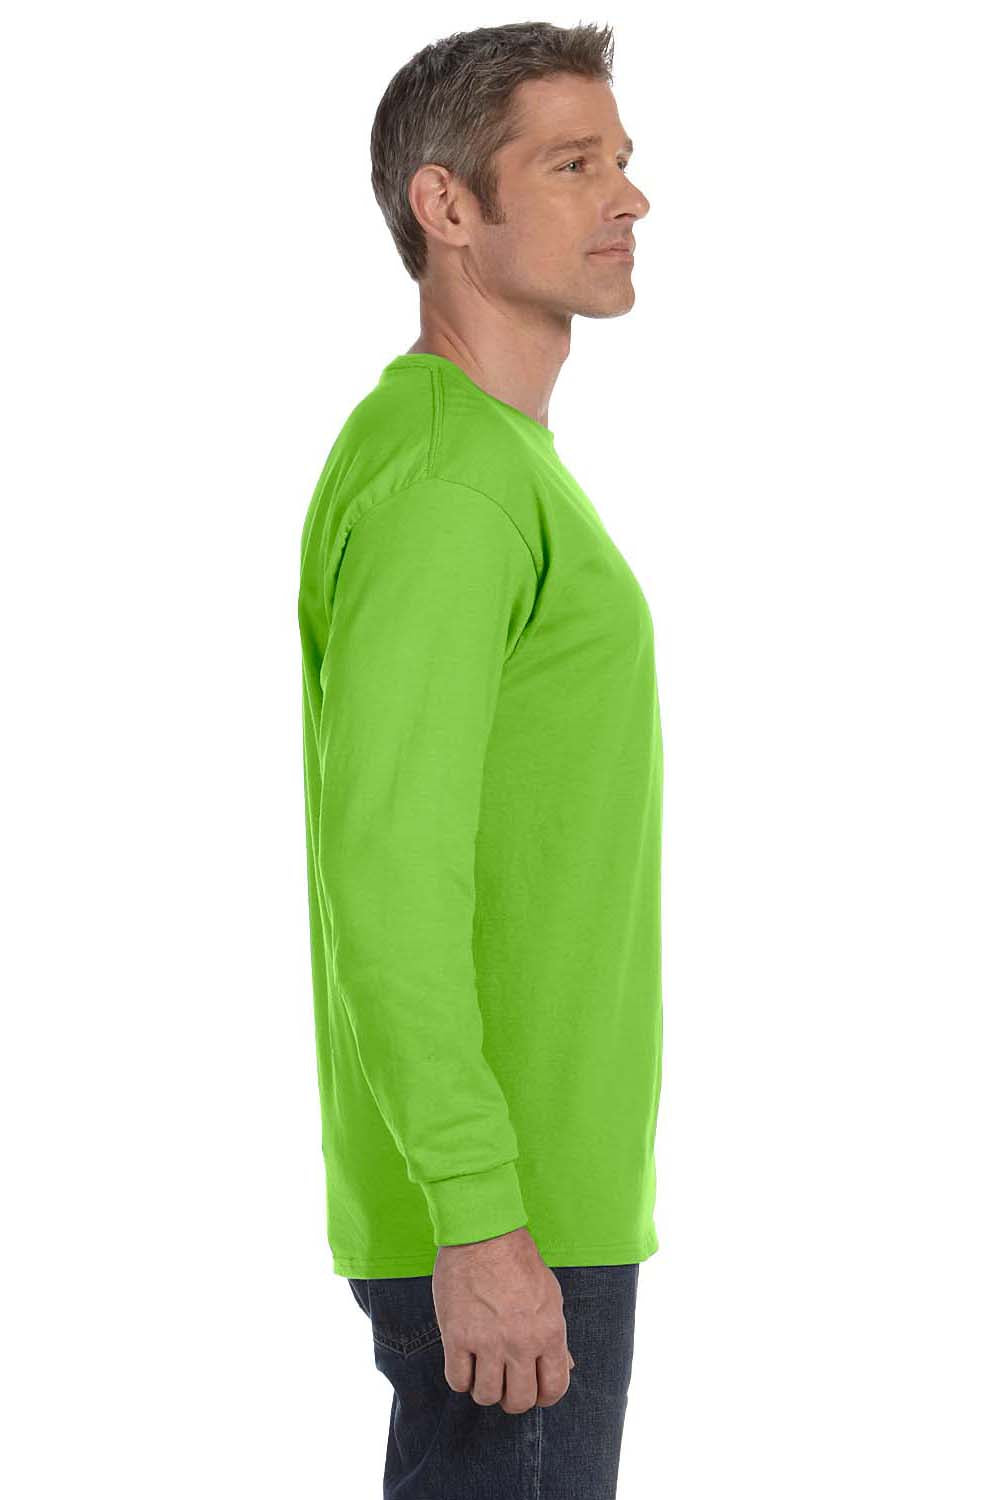 Hanes 5586 Mens ComfortSoft Long Sleeve Crewneck T-Shirt Lime Green Side